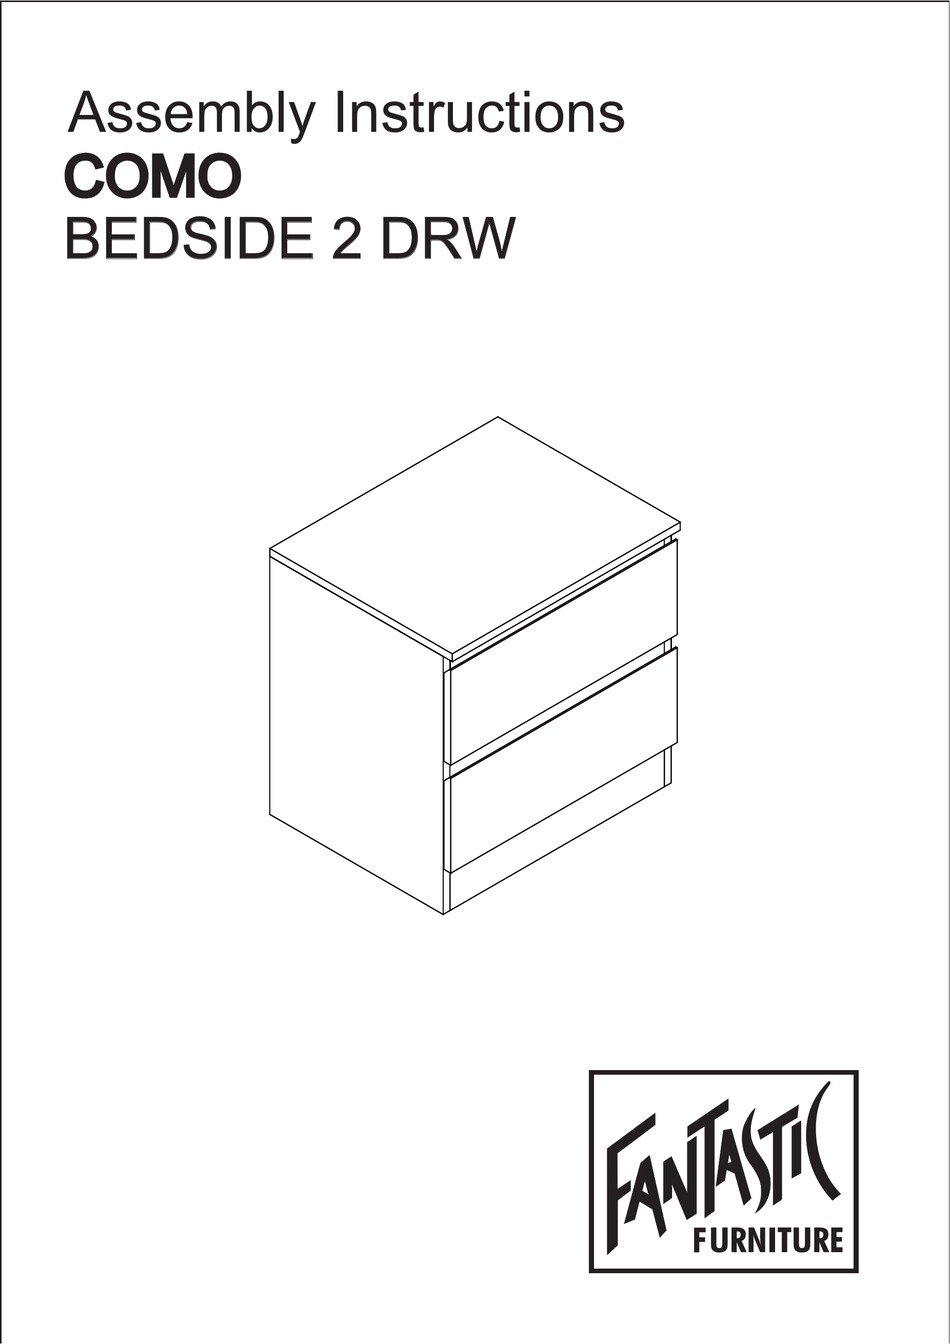 Fantastic Furniture Como Bedside 2 Drw, Como Queen Bed Assembly Instructions